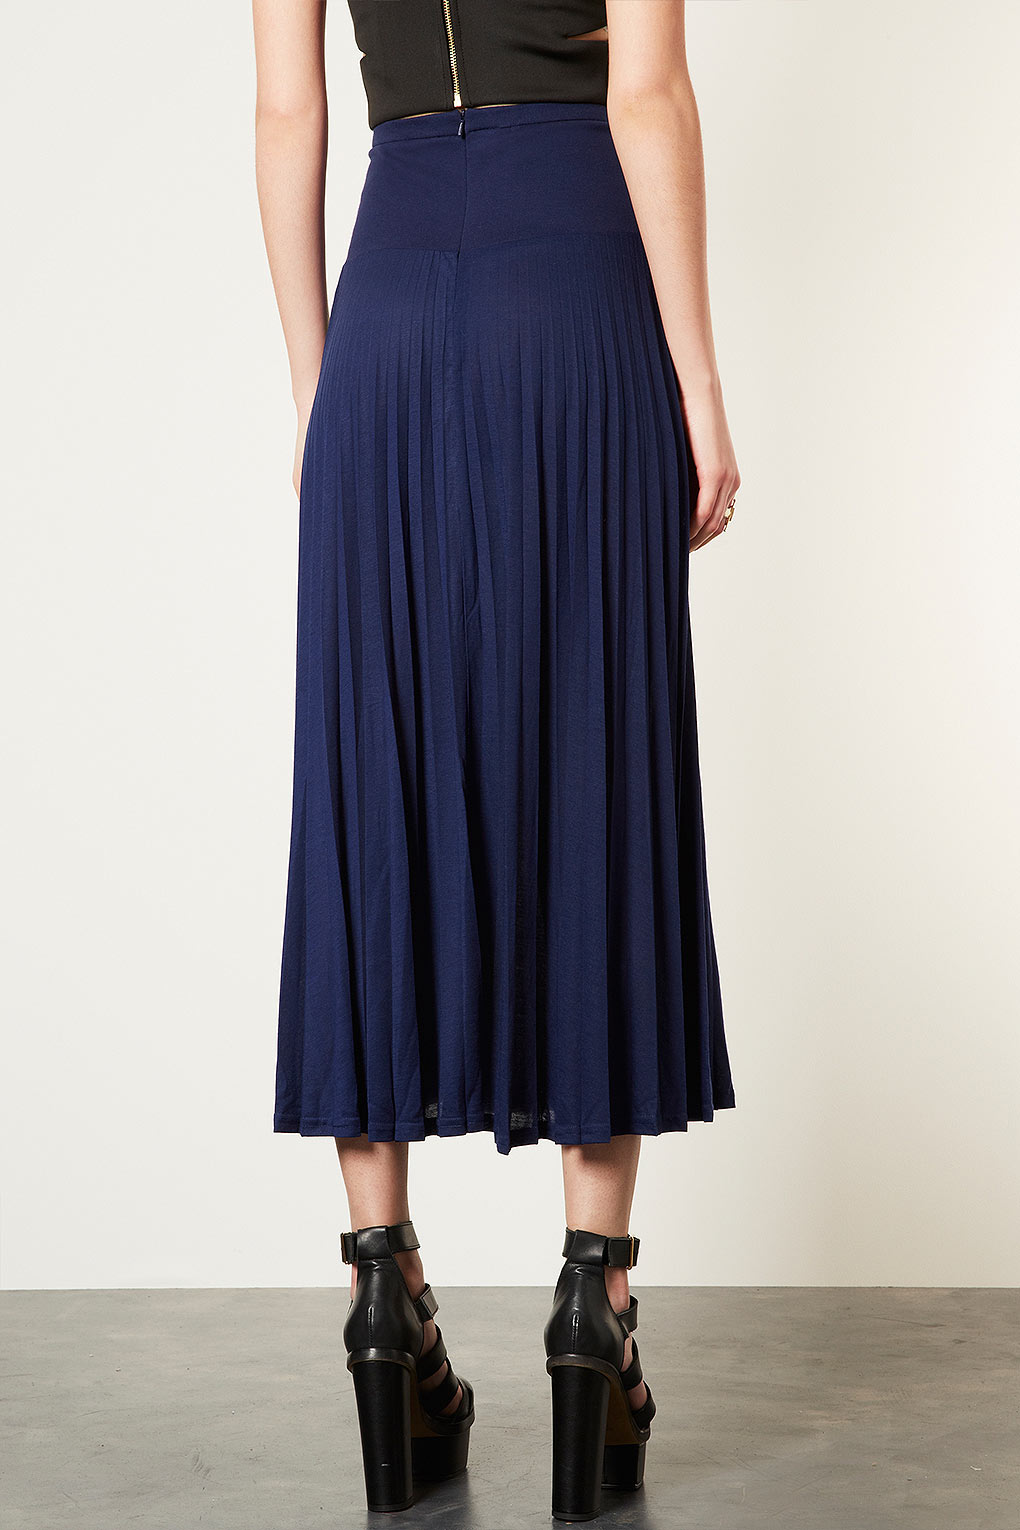 Lyst High Waist Pleated Maxi Skirt in Blue